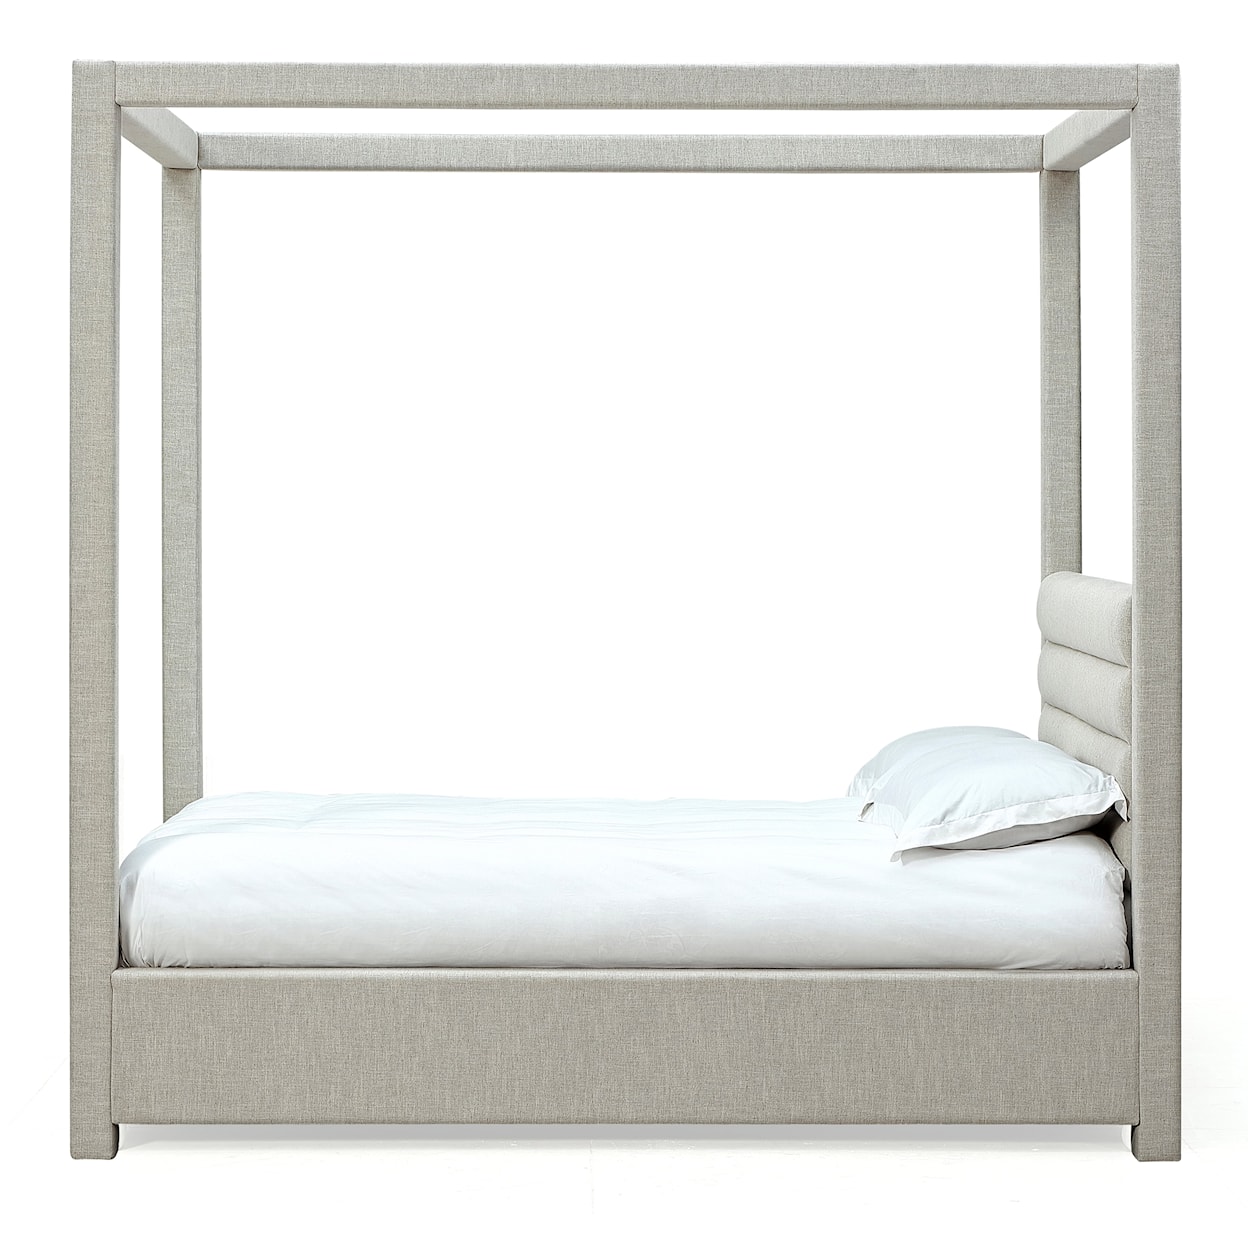 Modus International Rockford Full Upholstered Canopy Bed